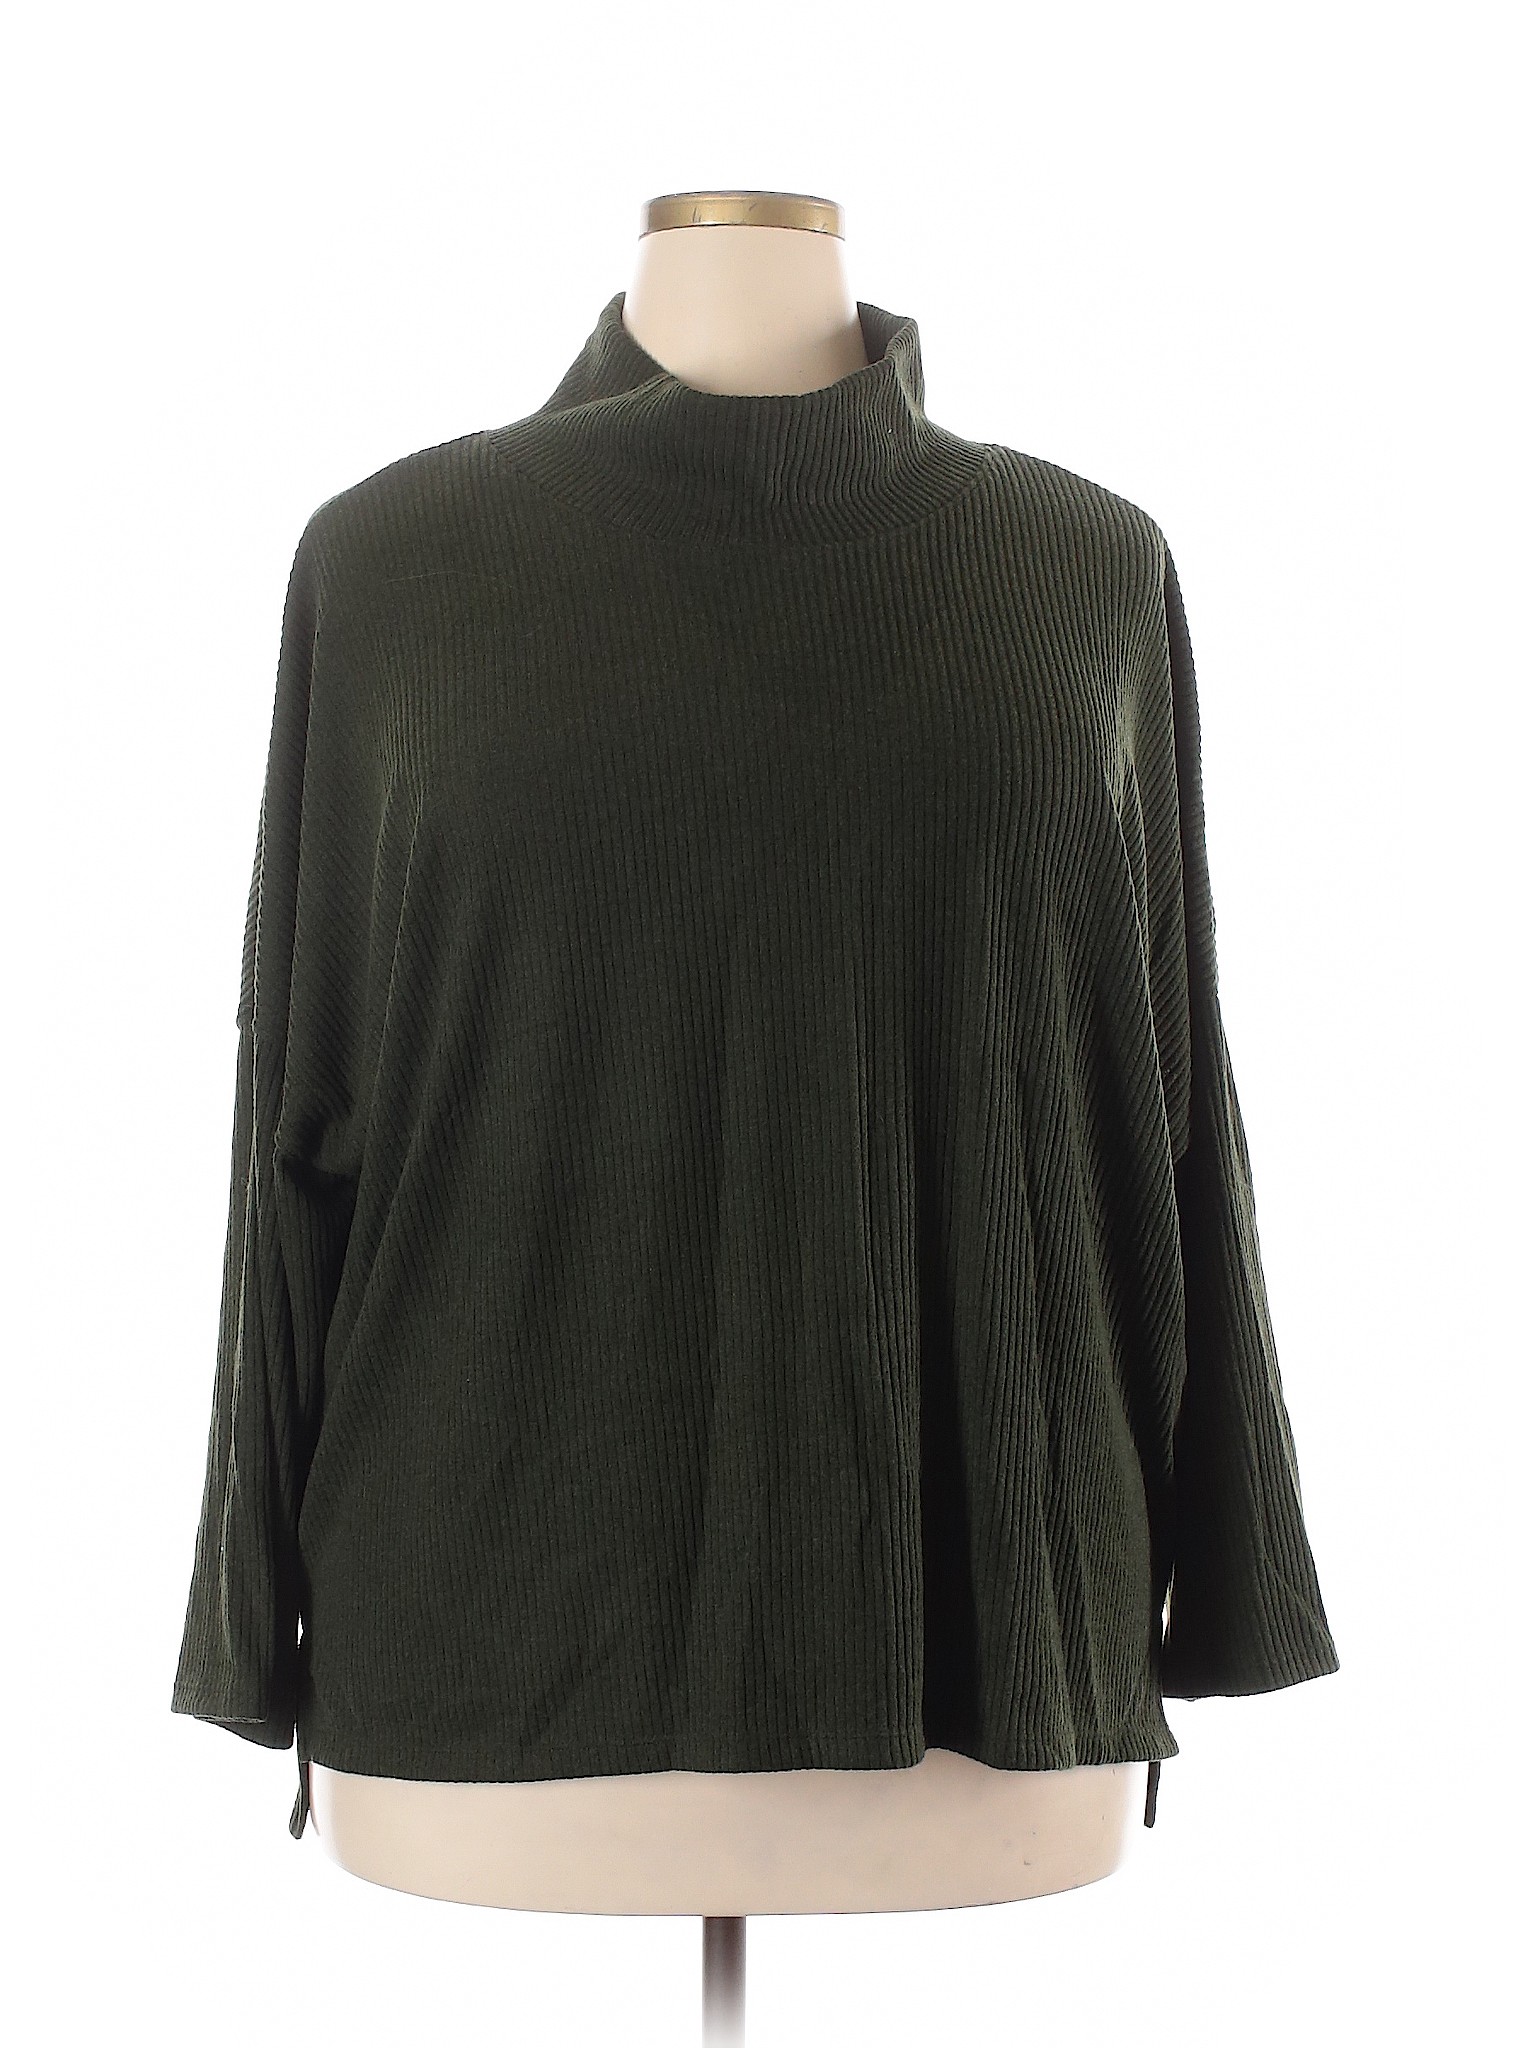 Old Navy Women Green Pullover Sweater XXL | eBay